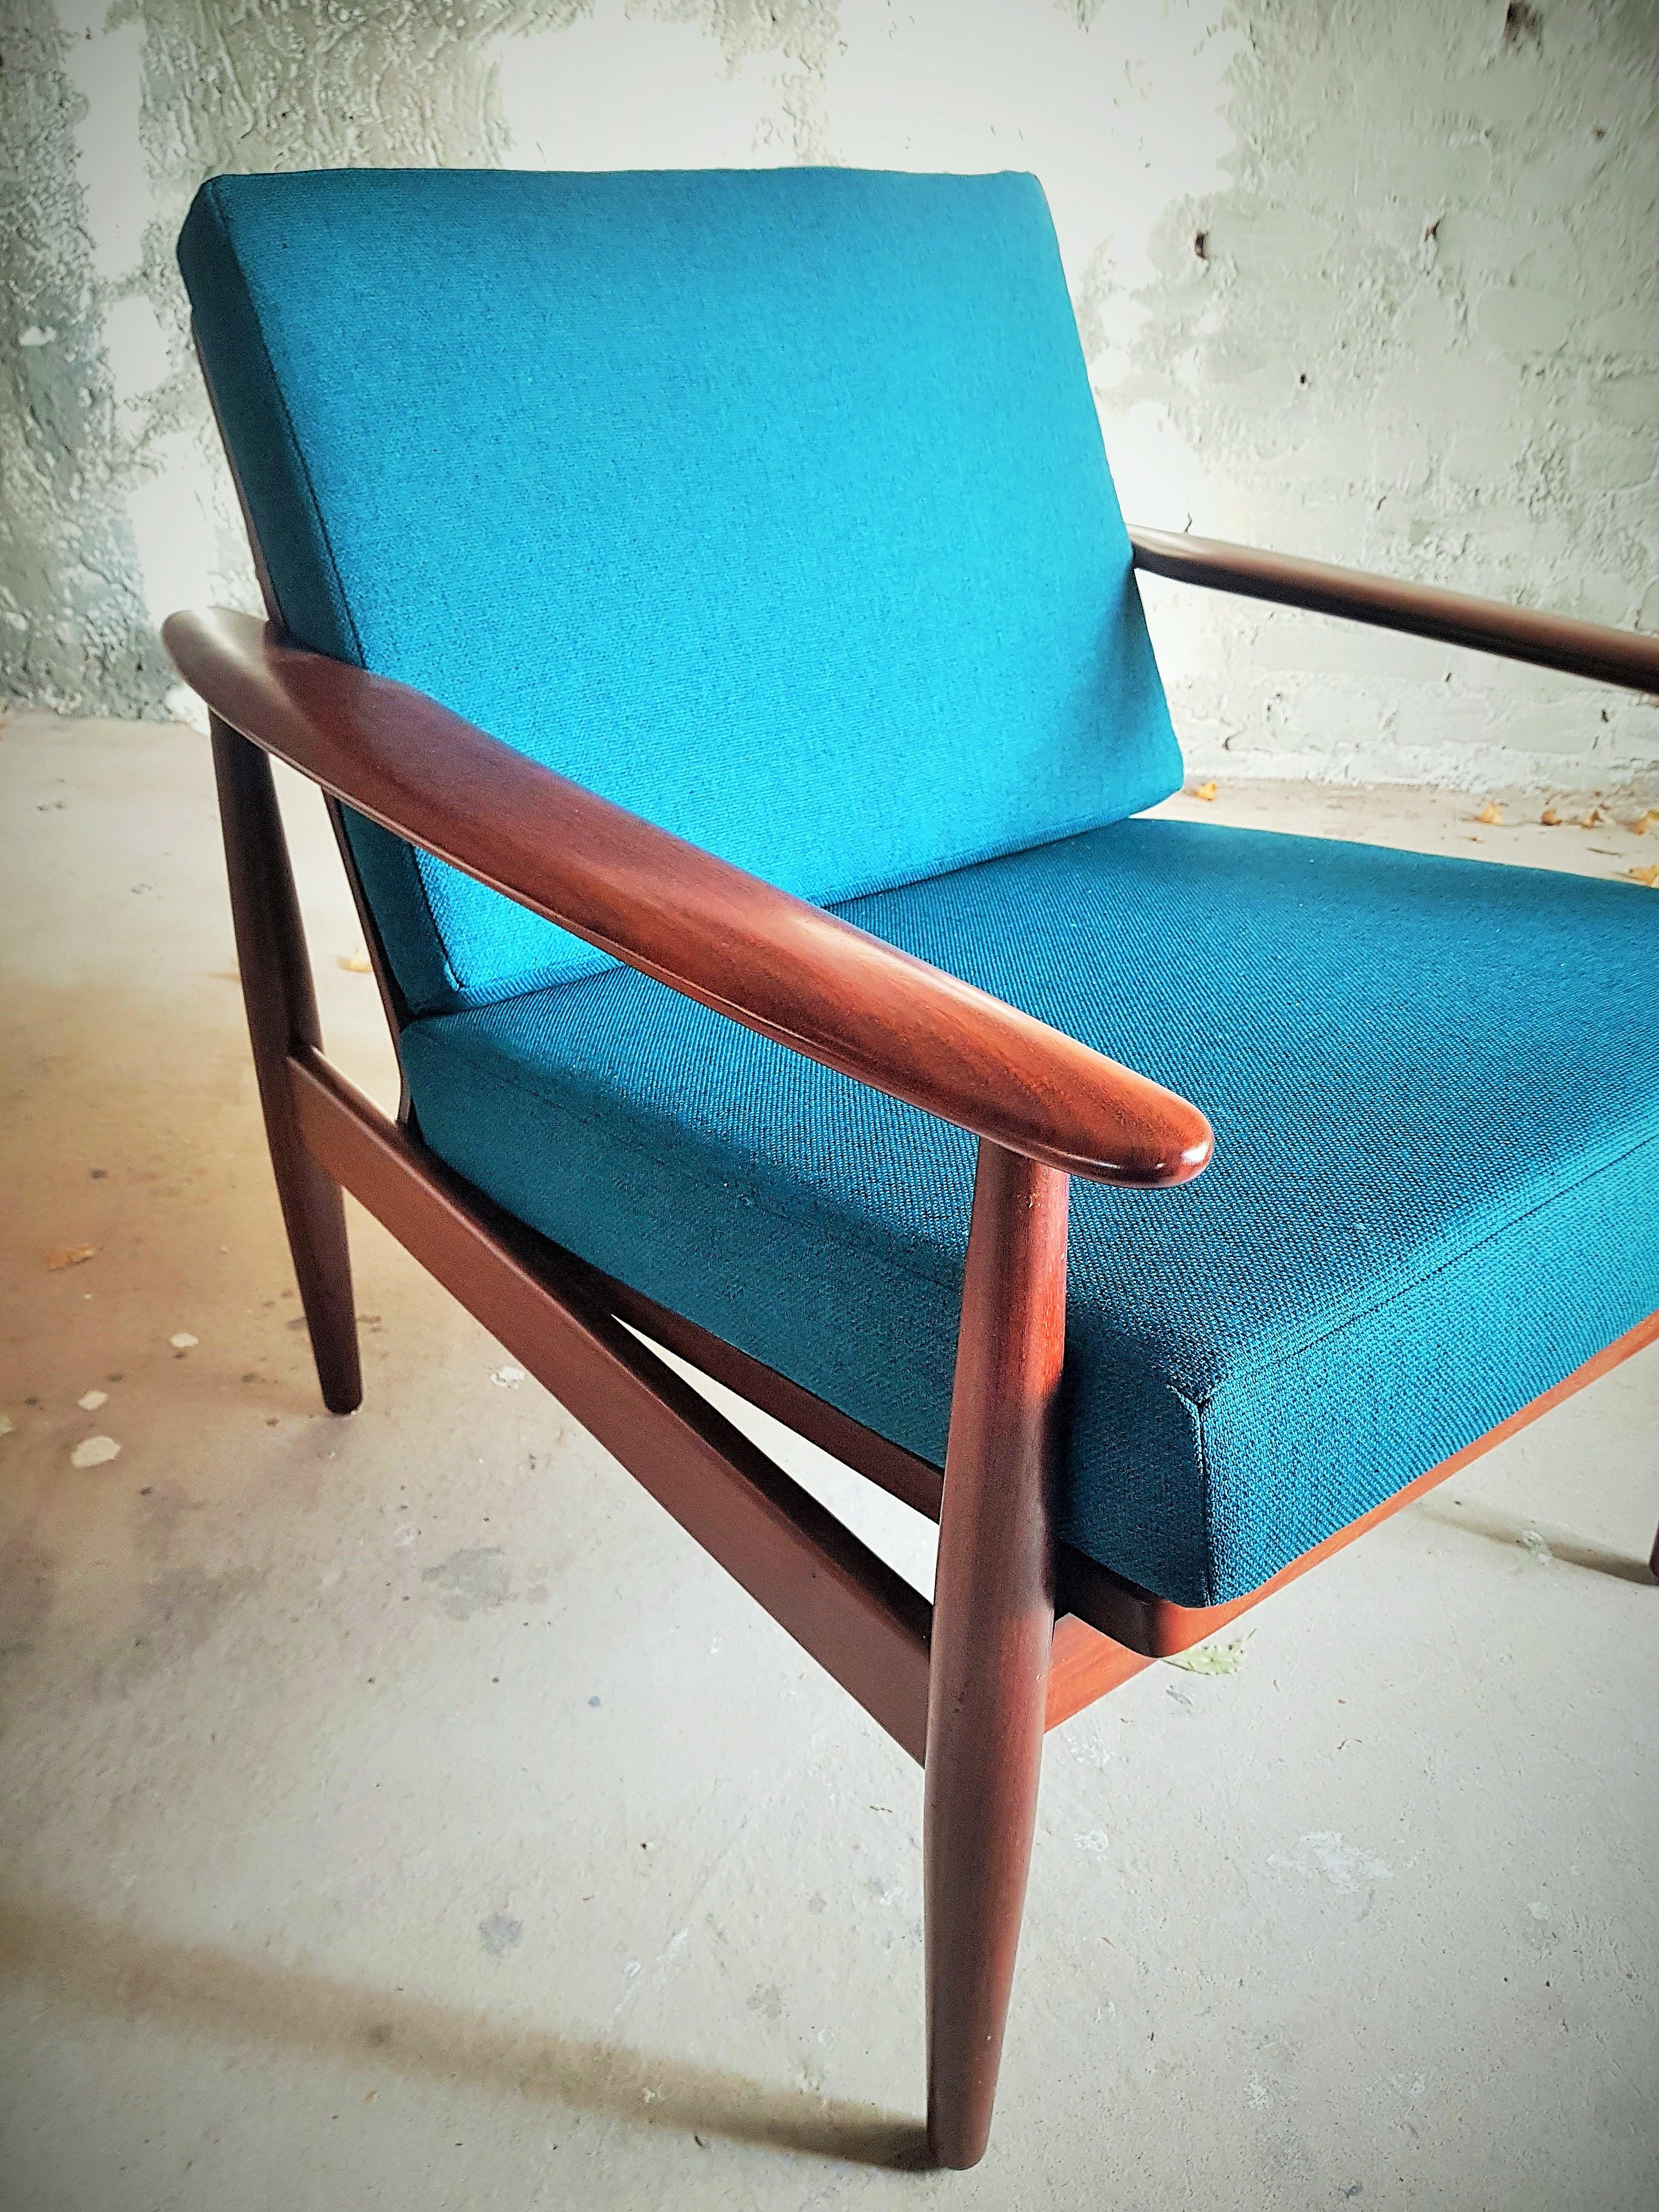 Pair of Mid-Century Scandinavian Teak Lounge Chair Armchair, Denmark, 1960 For Sale 2